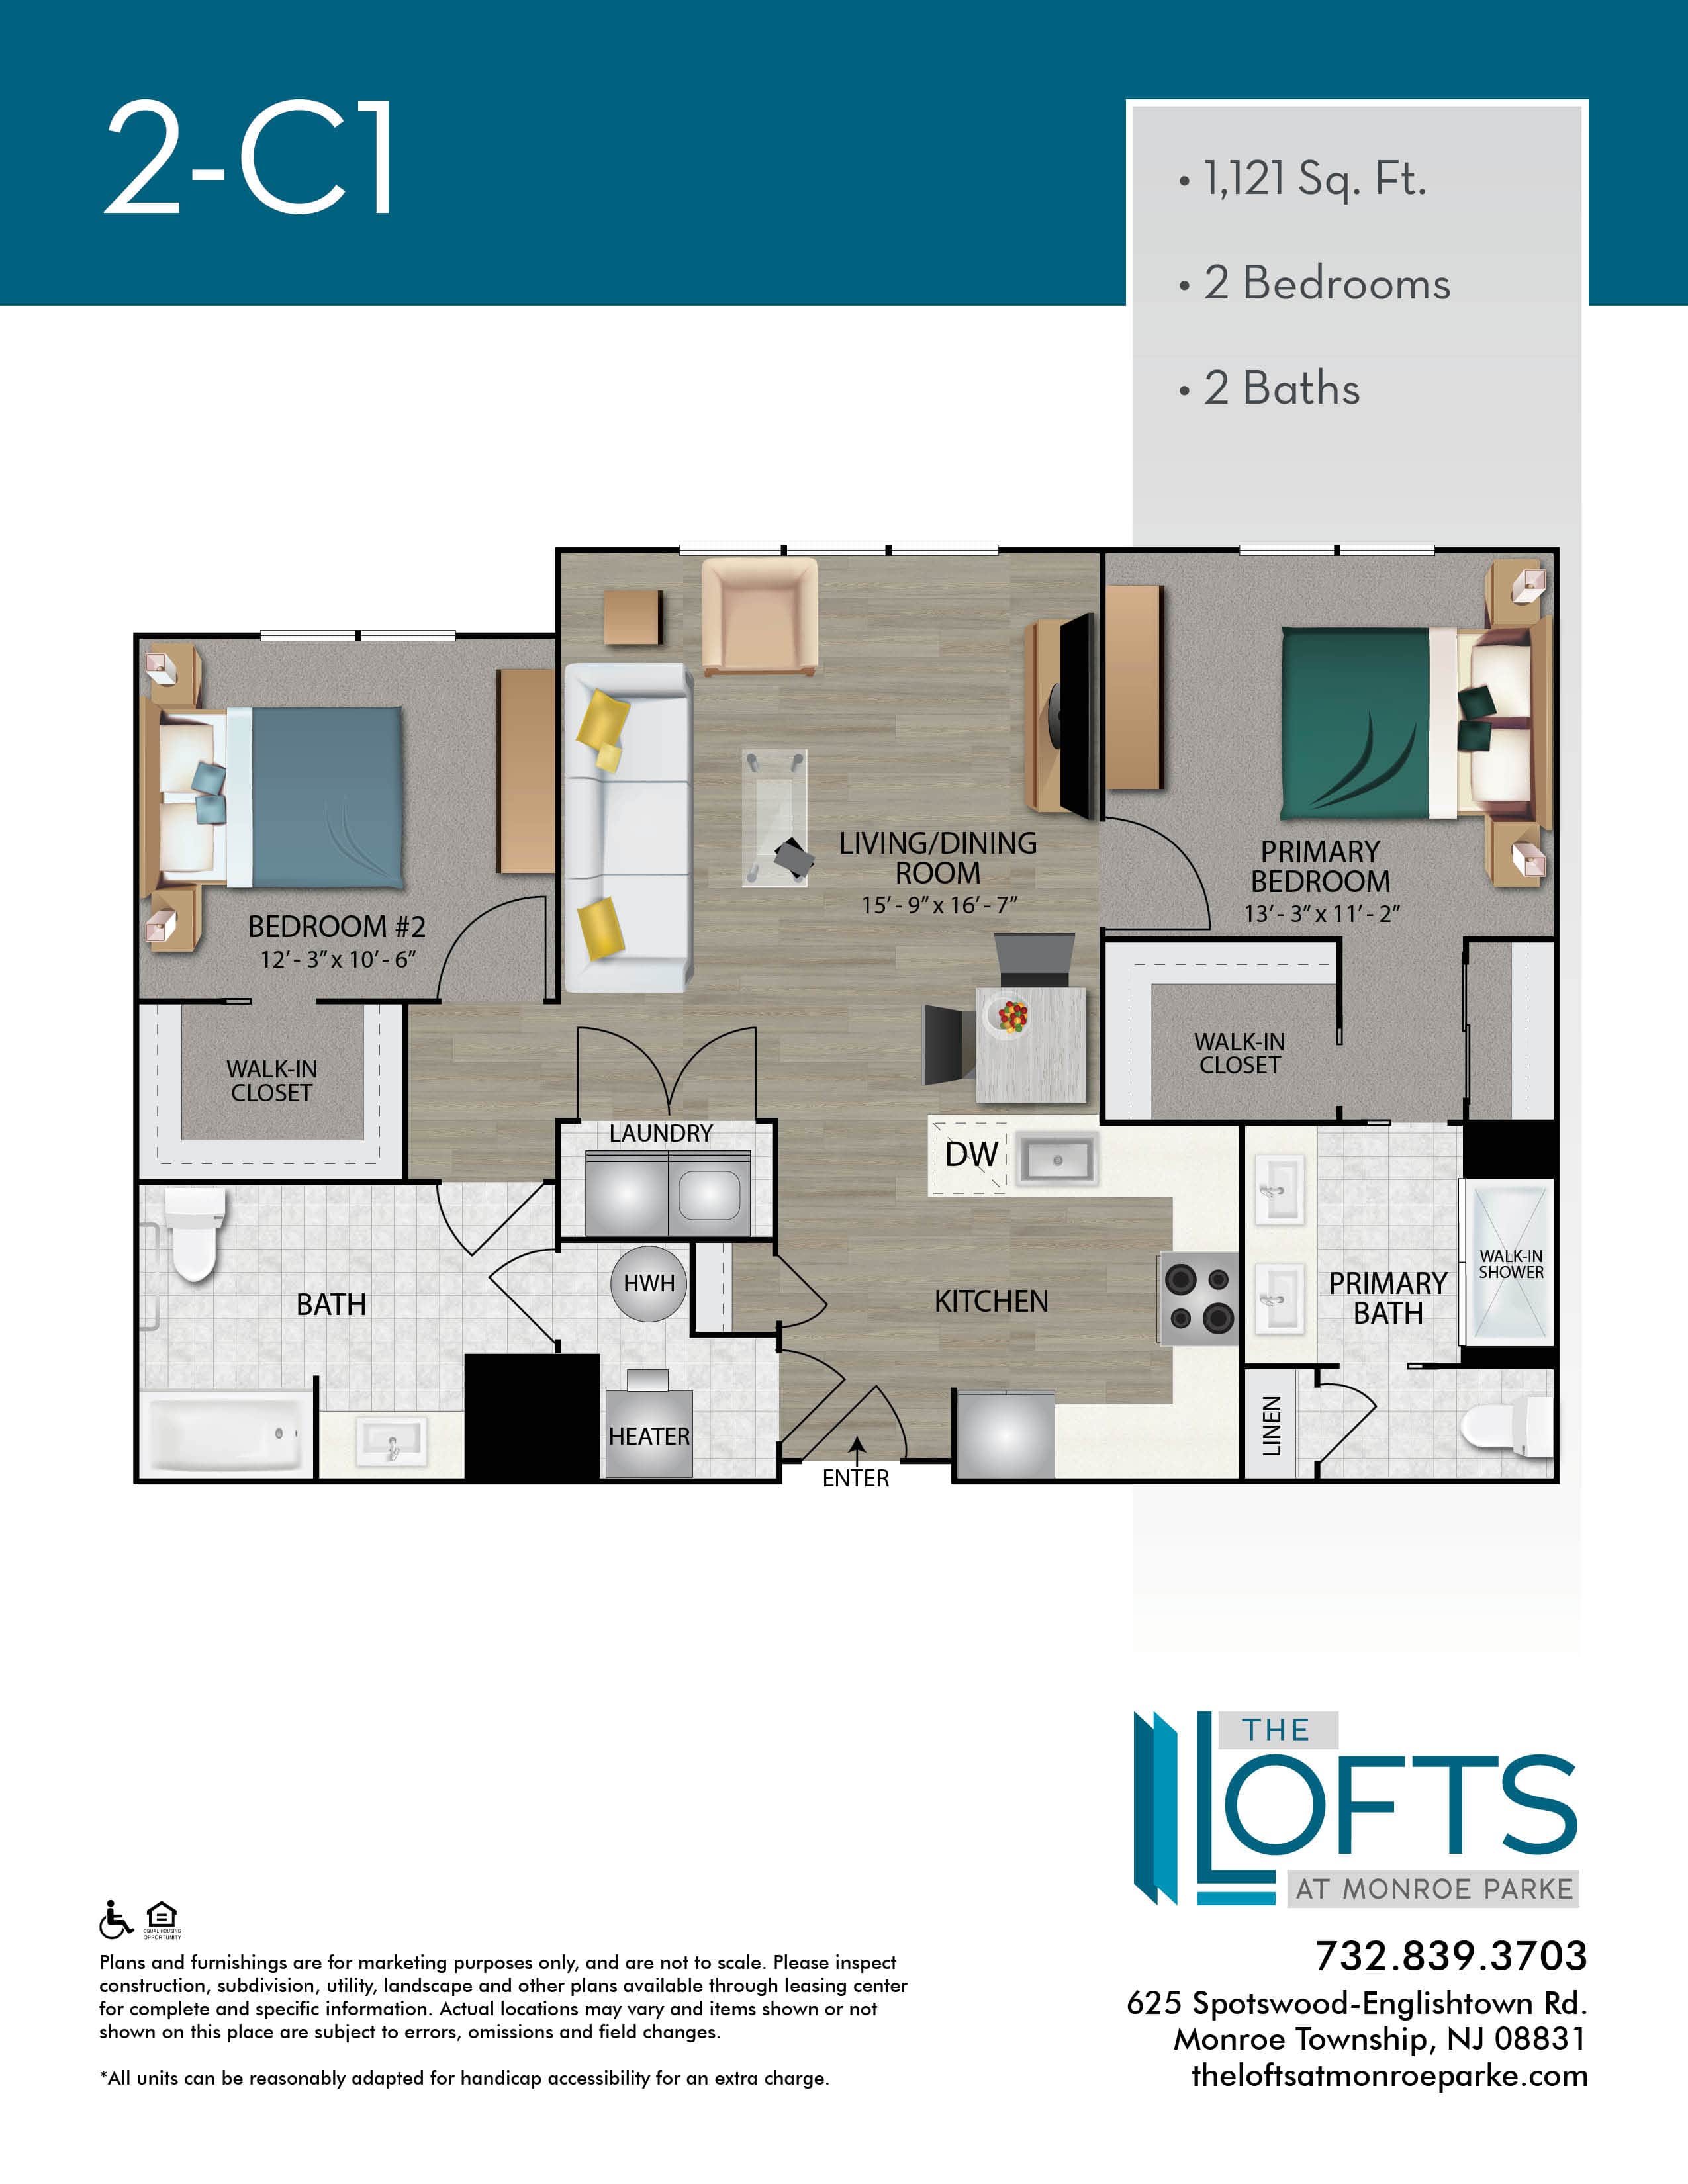 The Lofts at Monroe Park Apartment Floor Plan 2C1